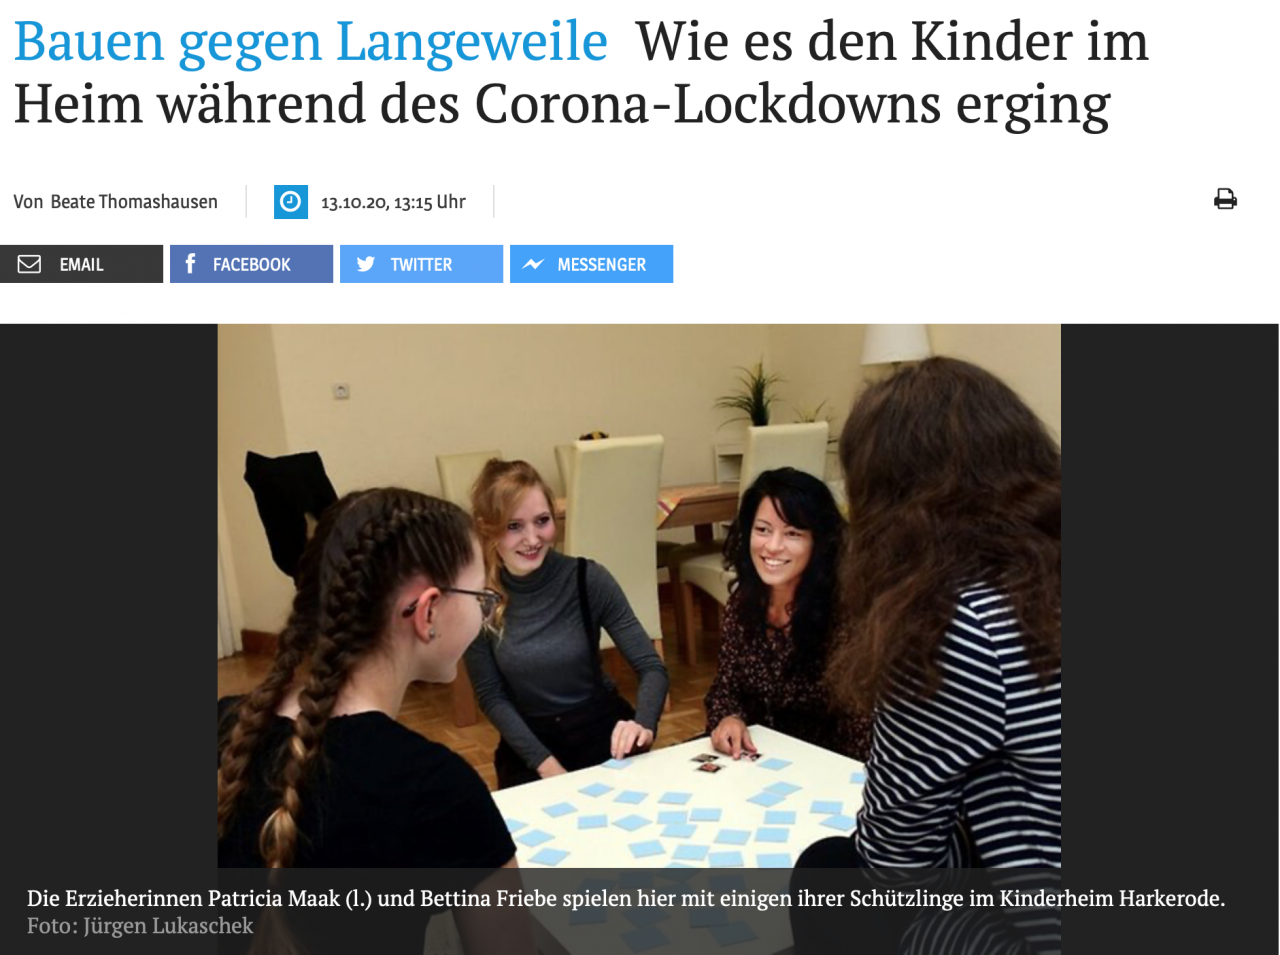 Stiftung Kinderheim Harkerode PRESSE / AKTUELLES